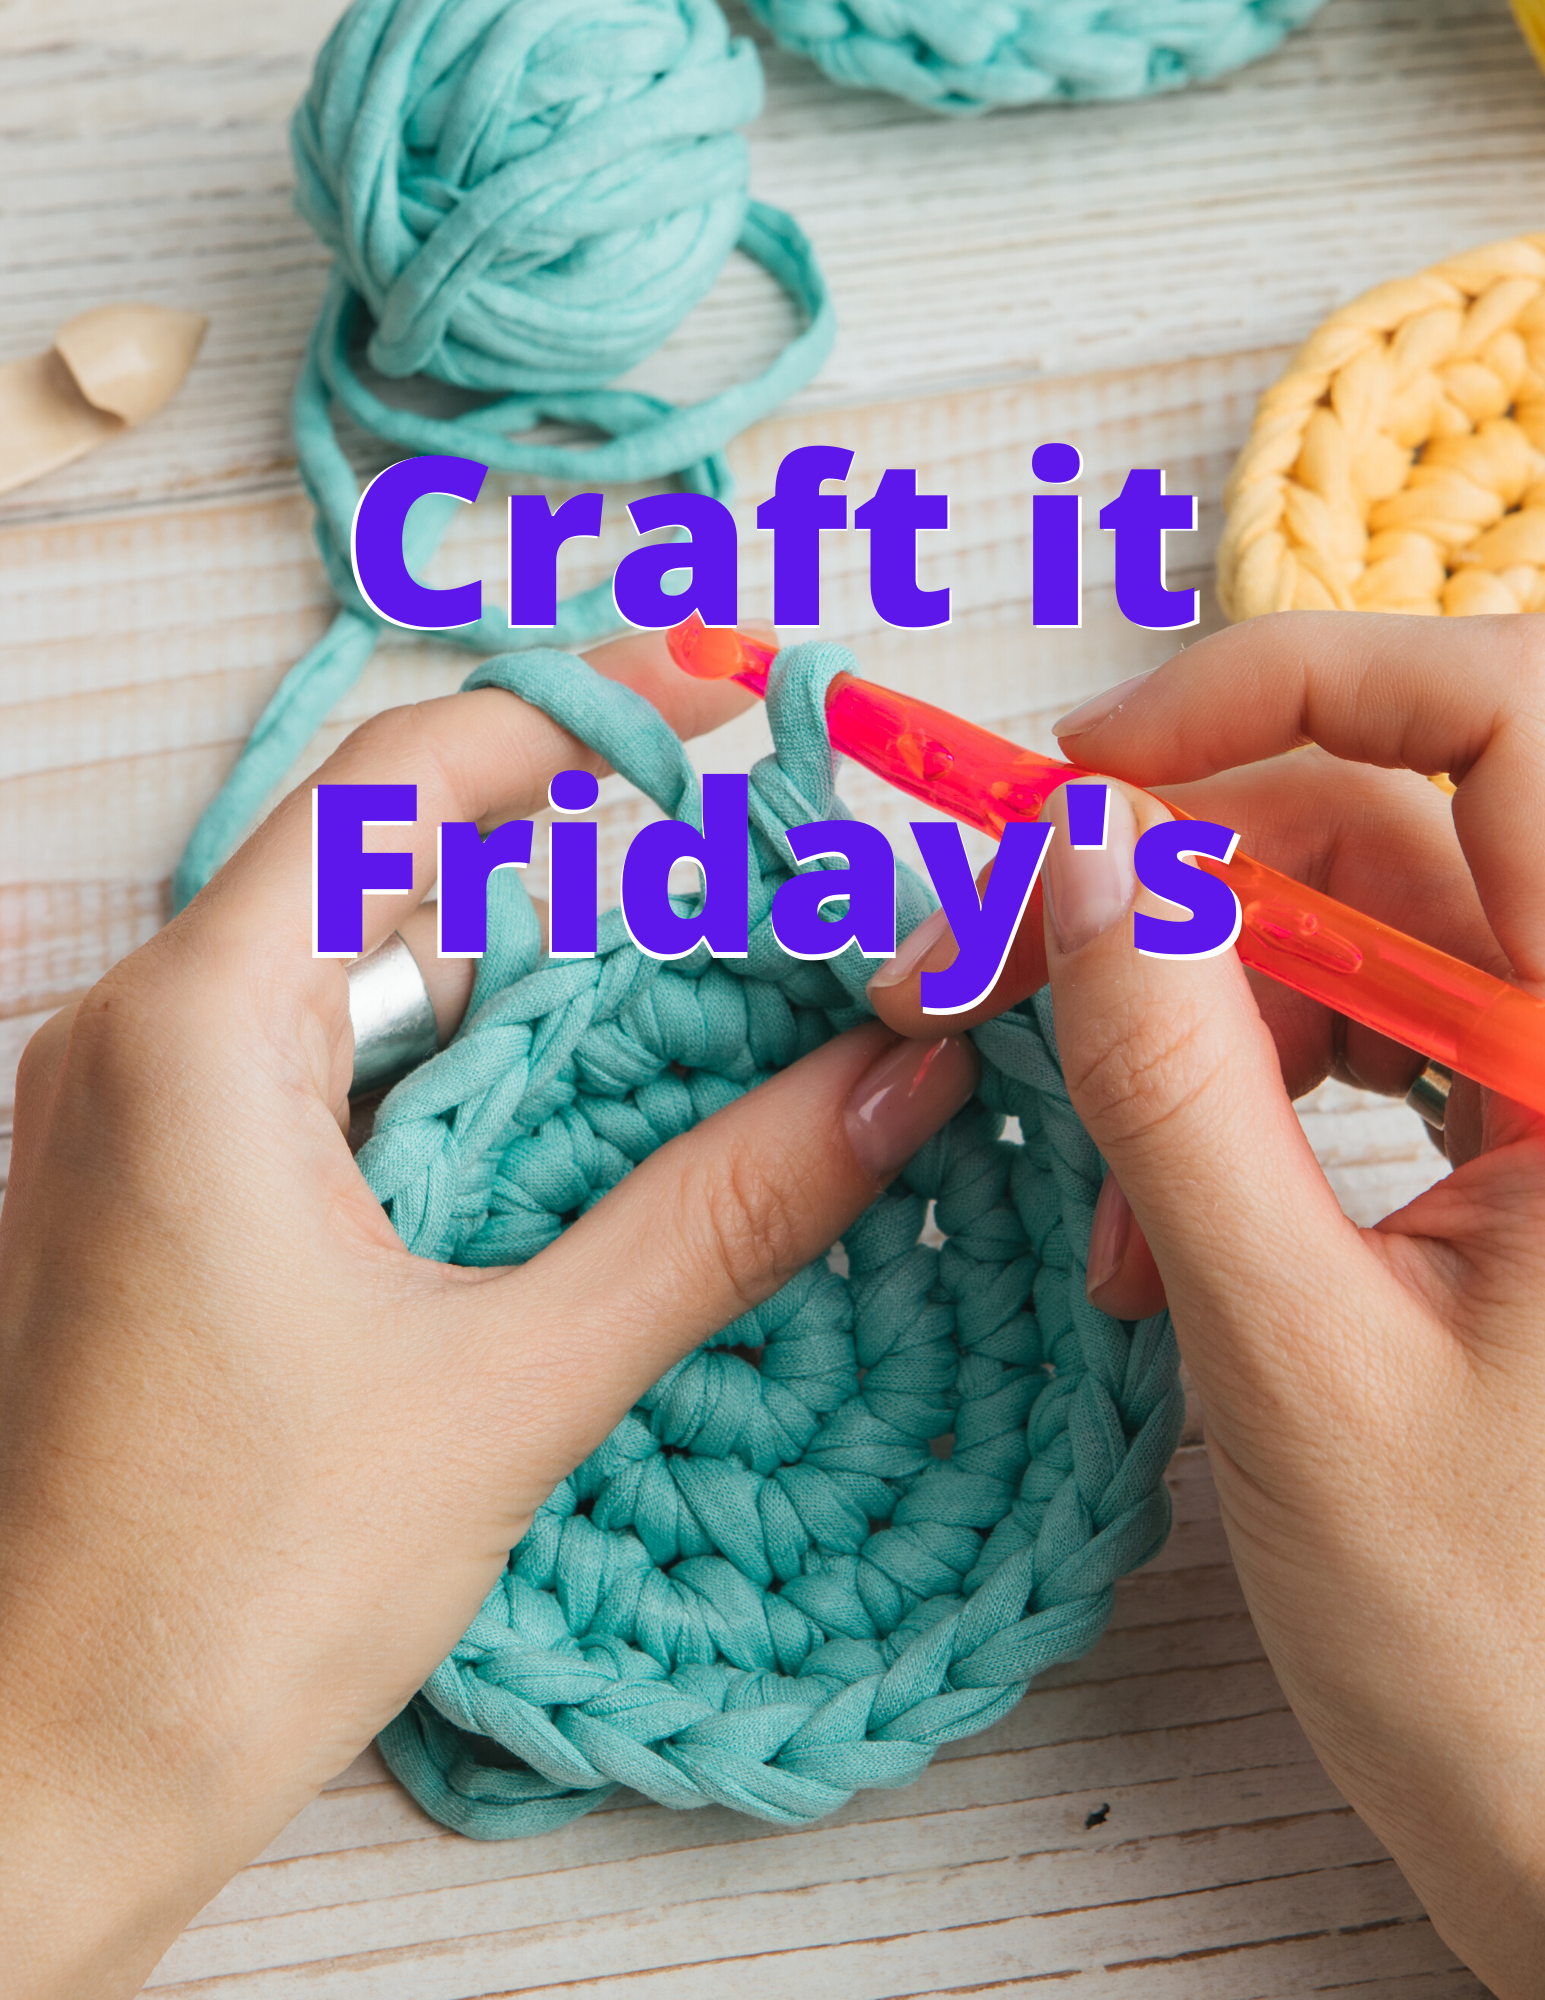 Craft it Friday's